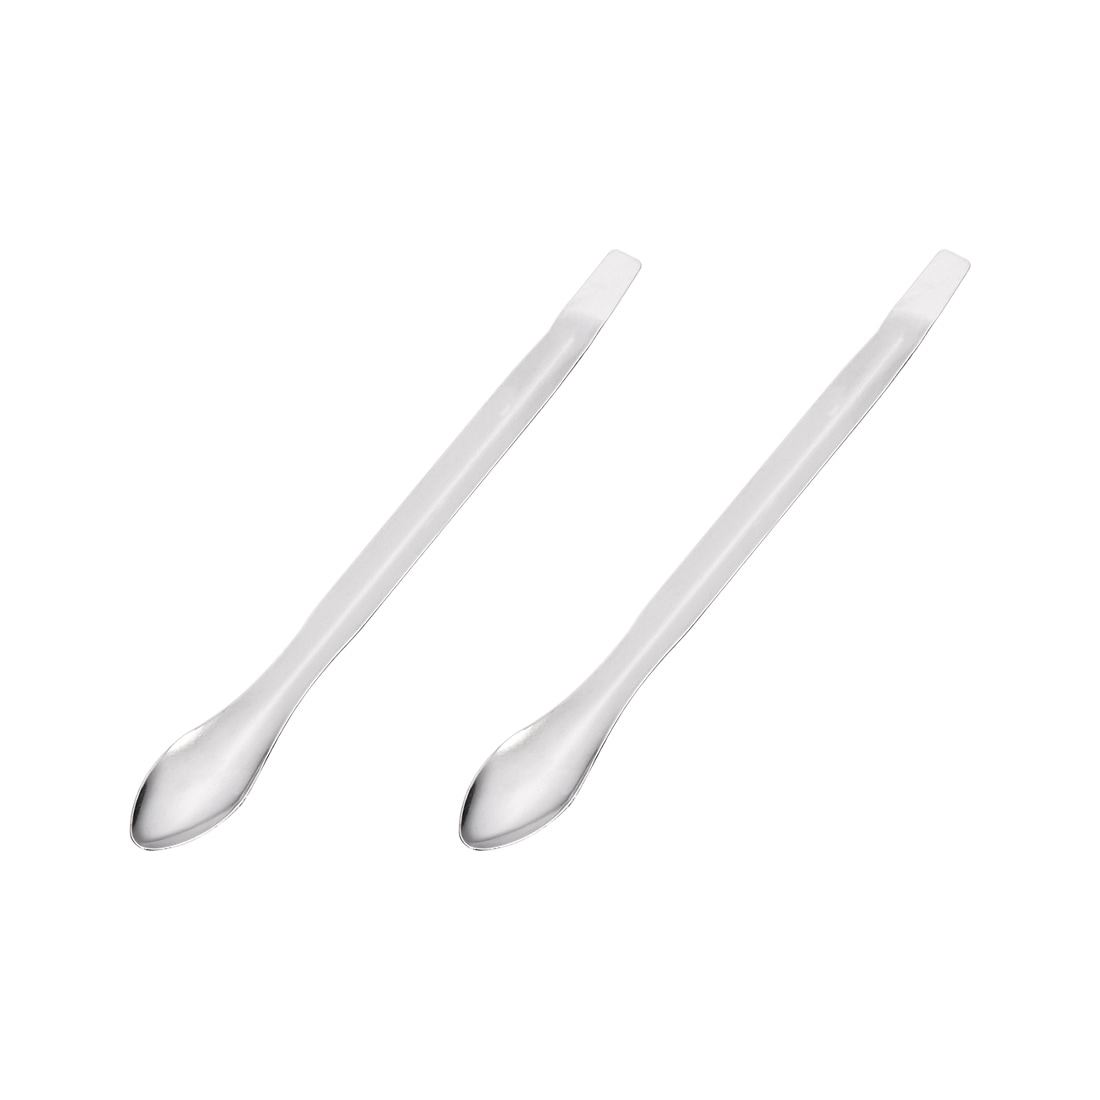 Micro Spoons 5 Gram Measuring Scoop Plastic Flat Bottom Spoon 15pcs - White